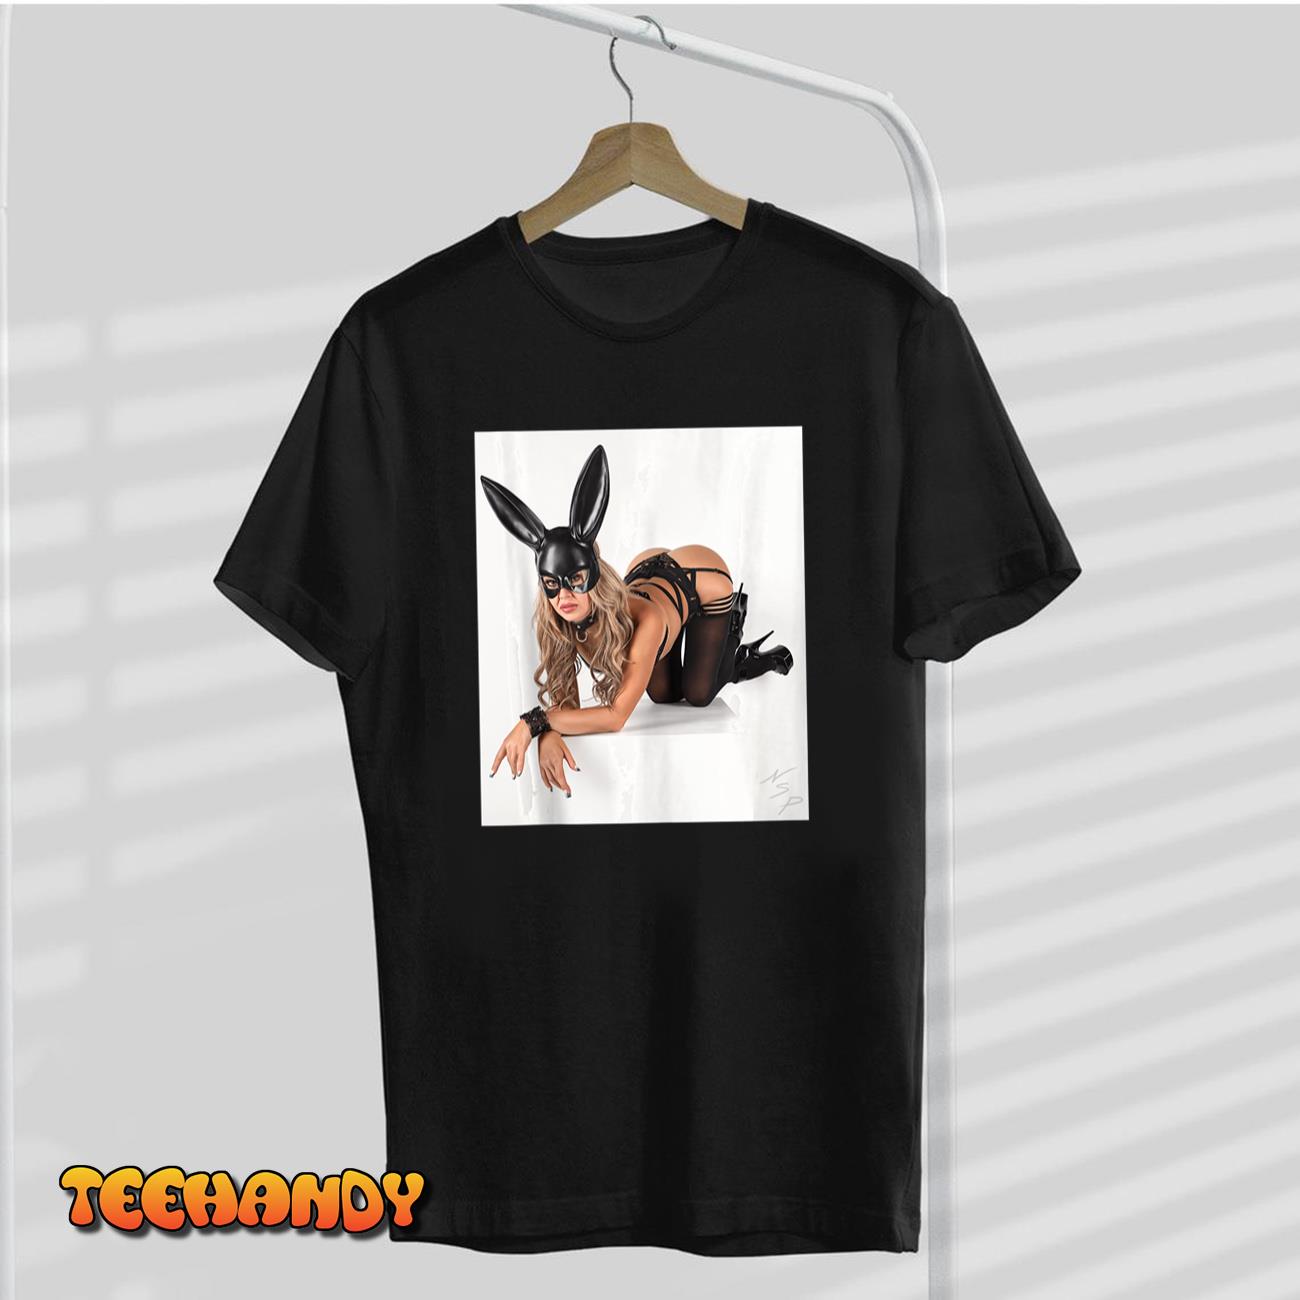 Hot Girl on T-shirt for Men – Bad Bunny Pinup Girl Sweashirt